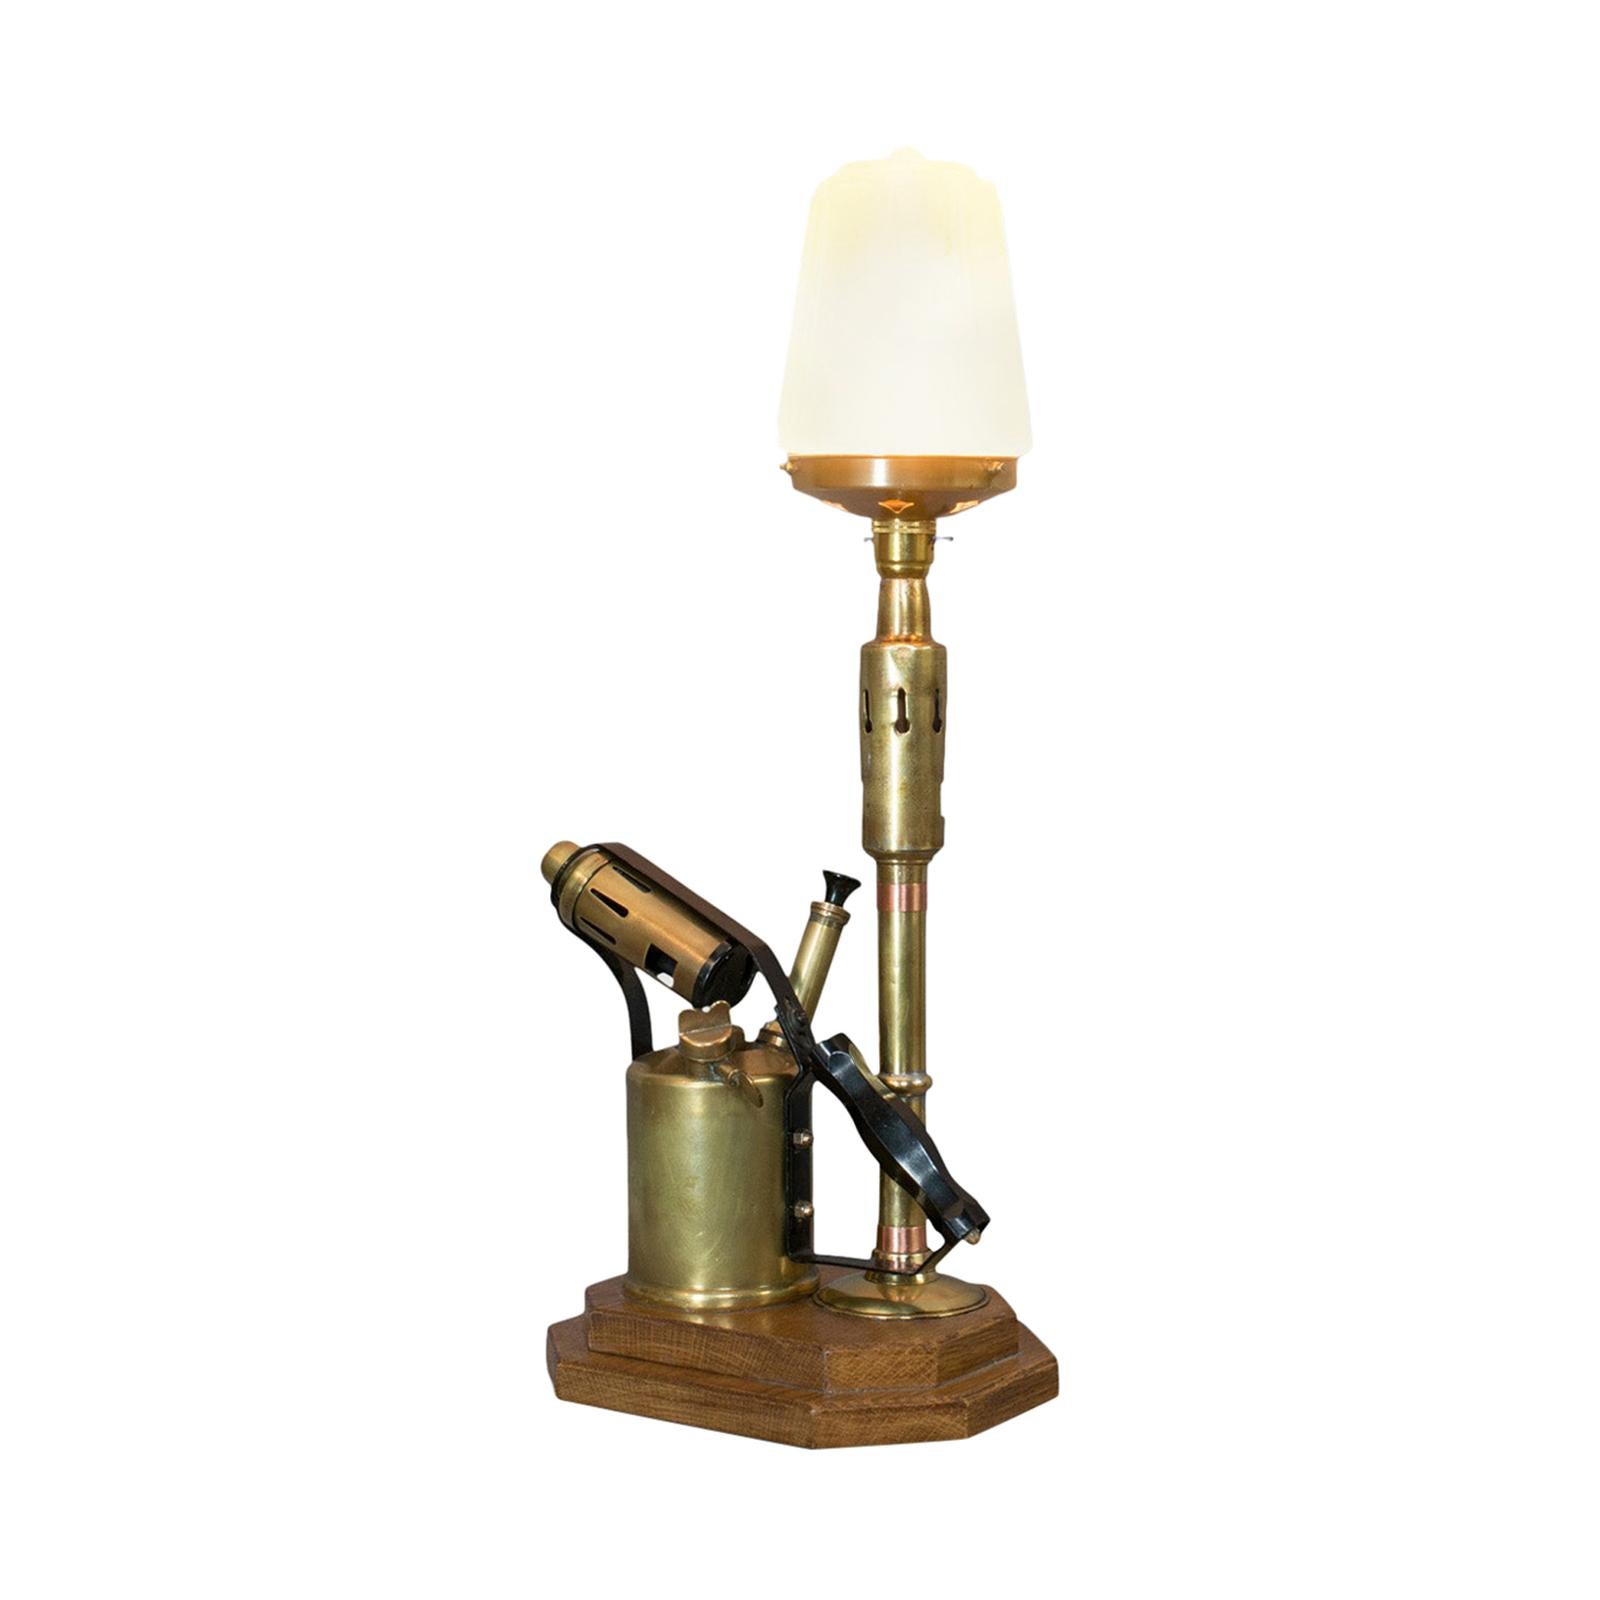 Vintage Decorative Lamp, English, Brass, Blow Torch, Light, Shade, Oak Base